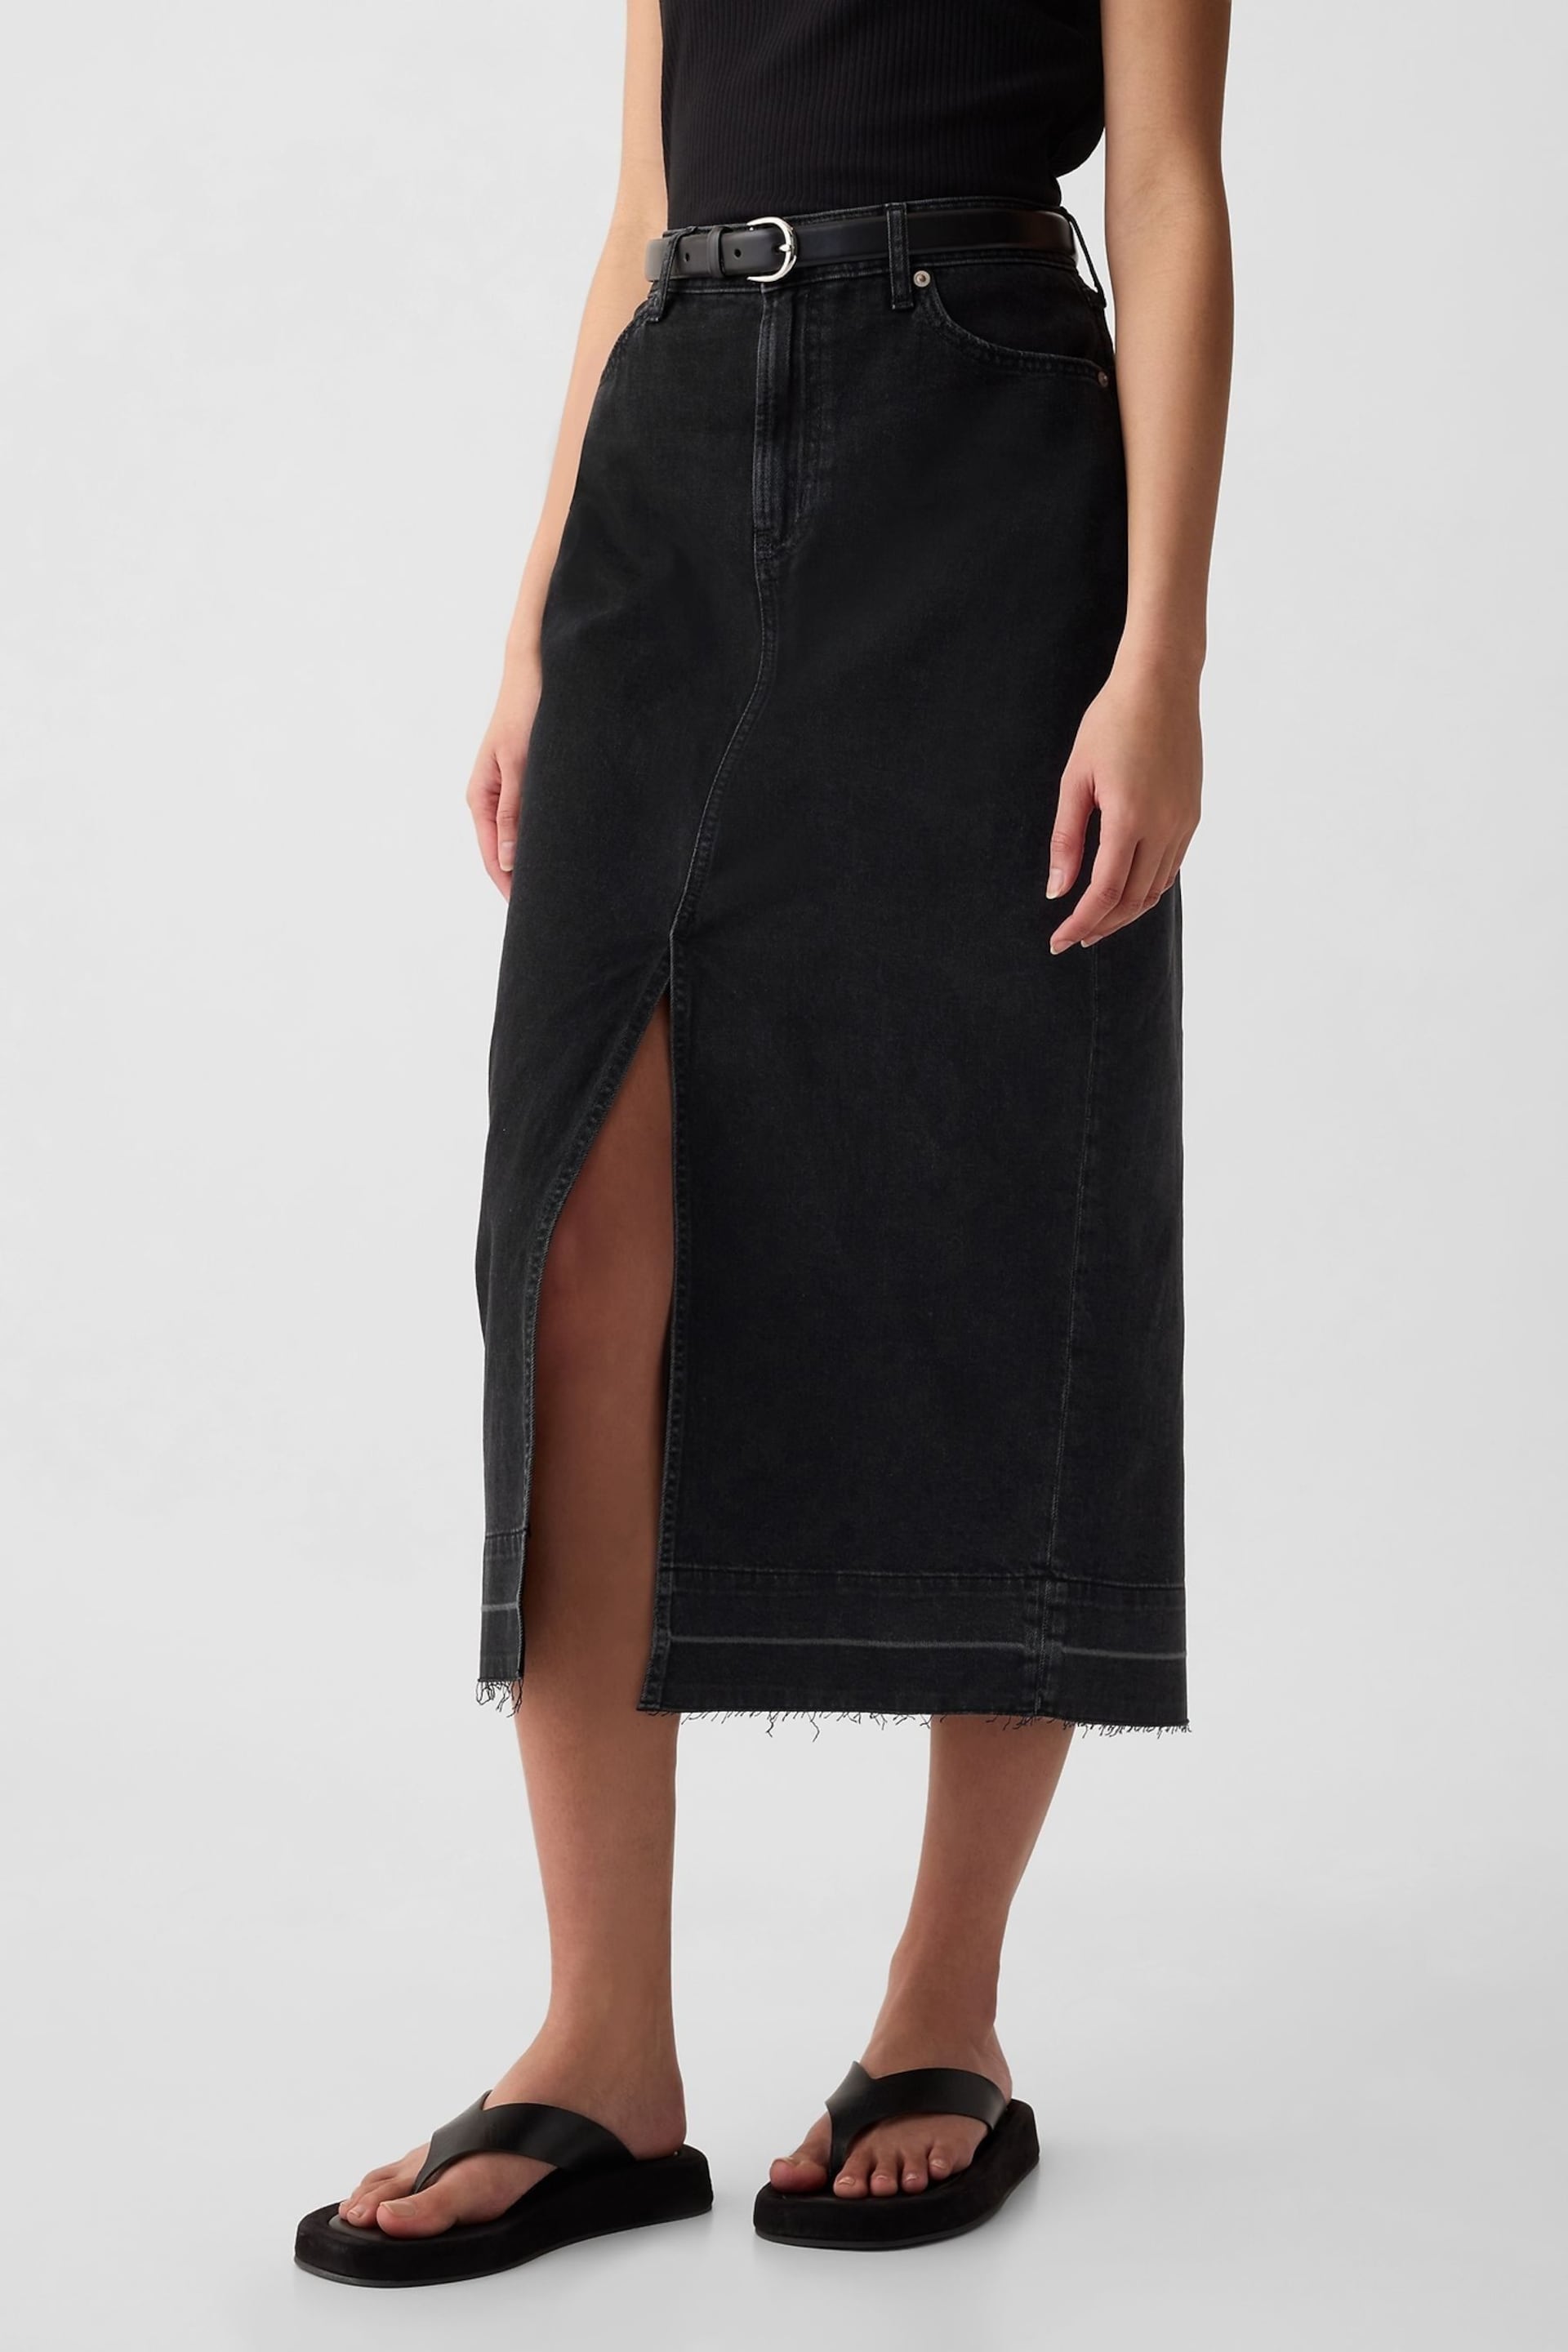 Gap Black Denim Midi Skirt - Image 1 of 5